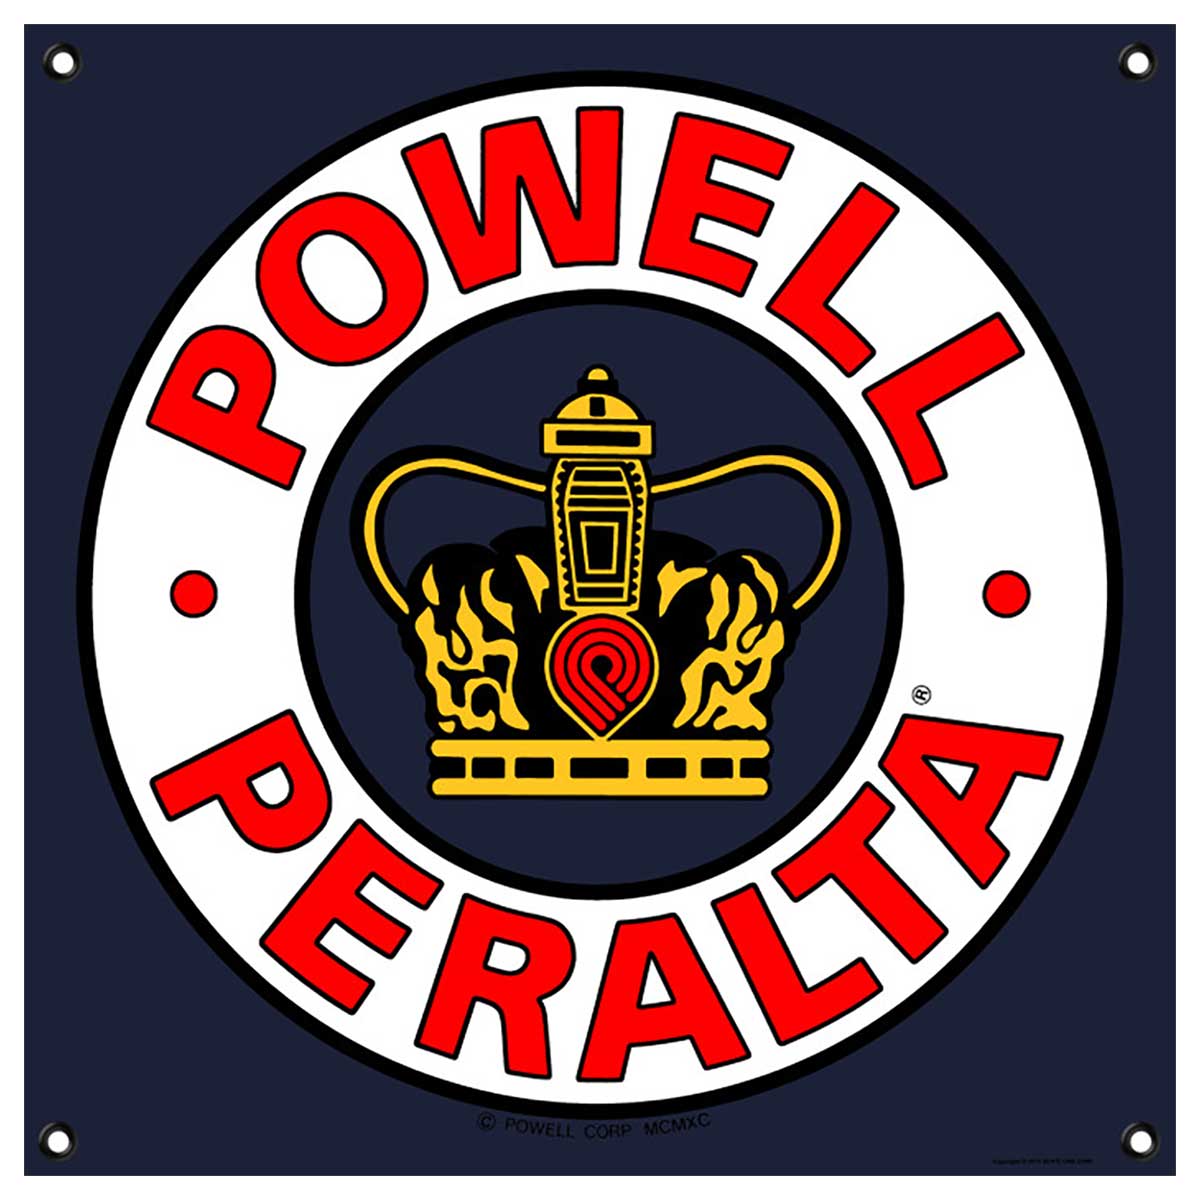 Powell Peralta Skateboards Supreme Banner - 20 x 20